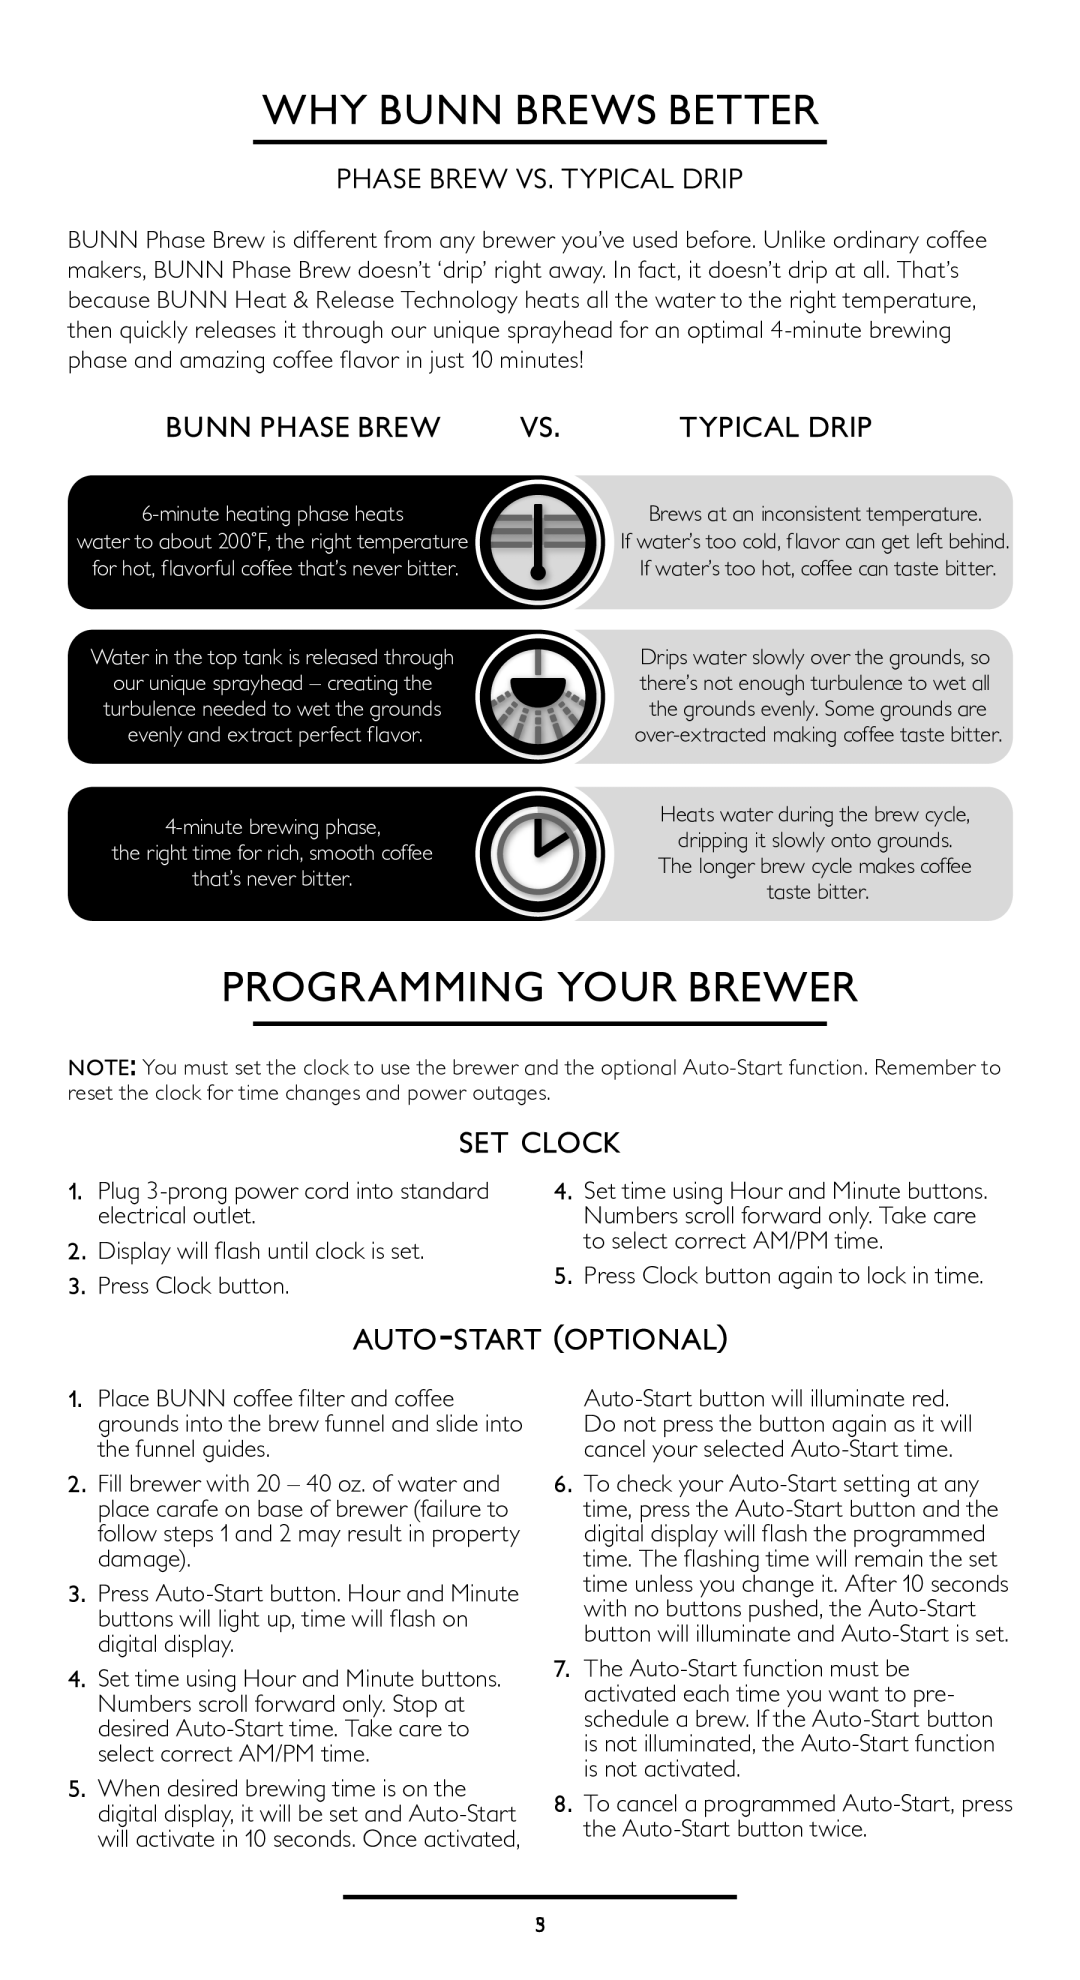 Bunn HG manual Why Bunn Brews Better, Programming Your Brewer, Phase Brew Vs. Typical Drip, Bunn Phase Brew, set clock 